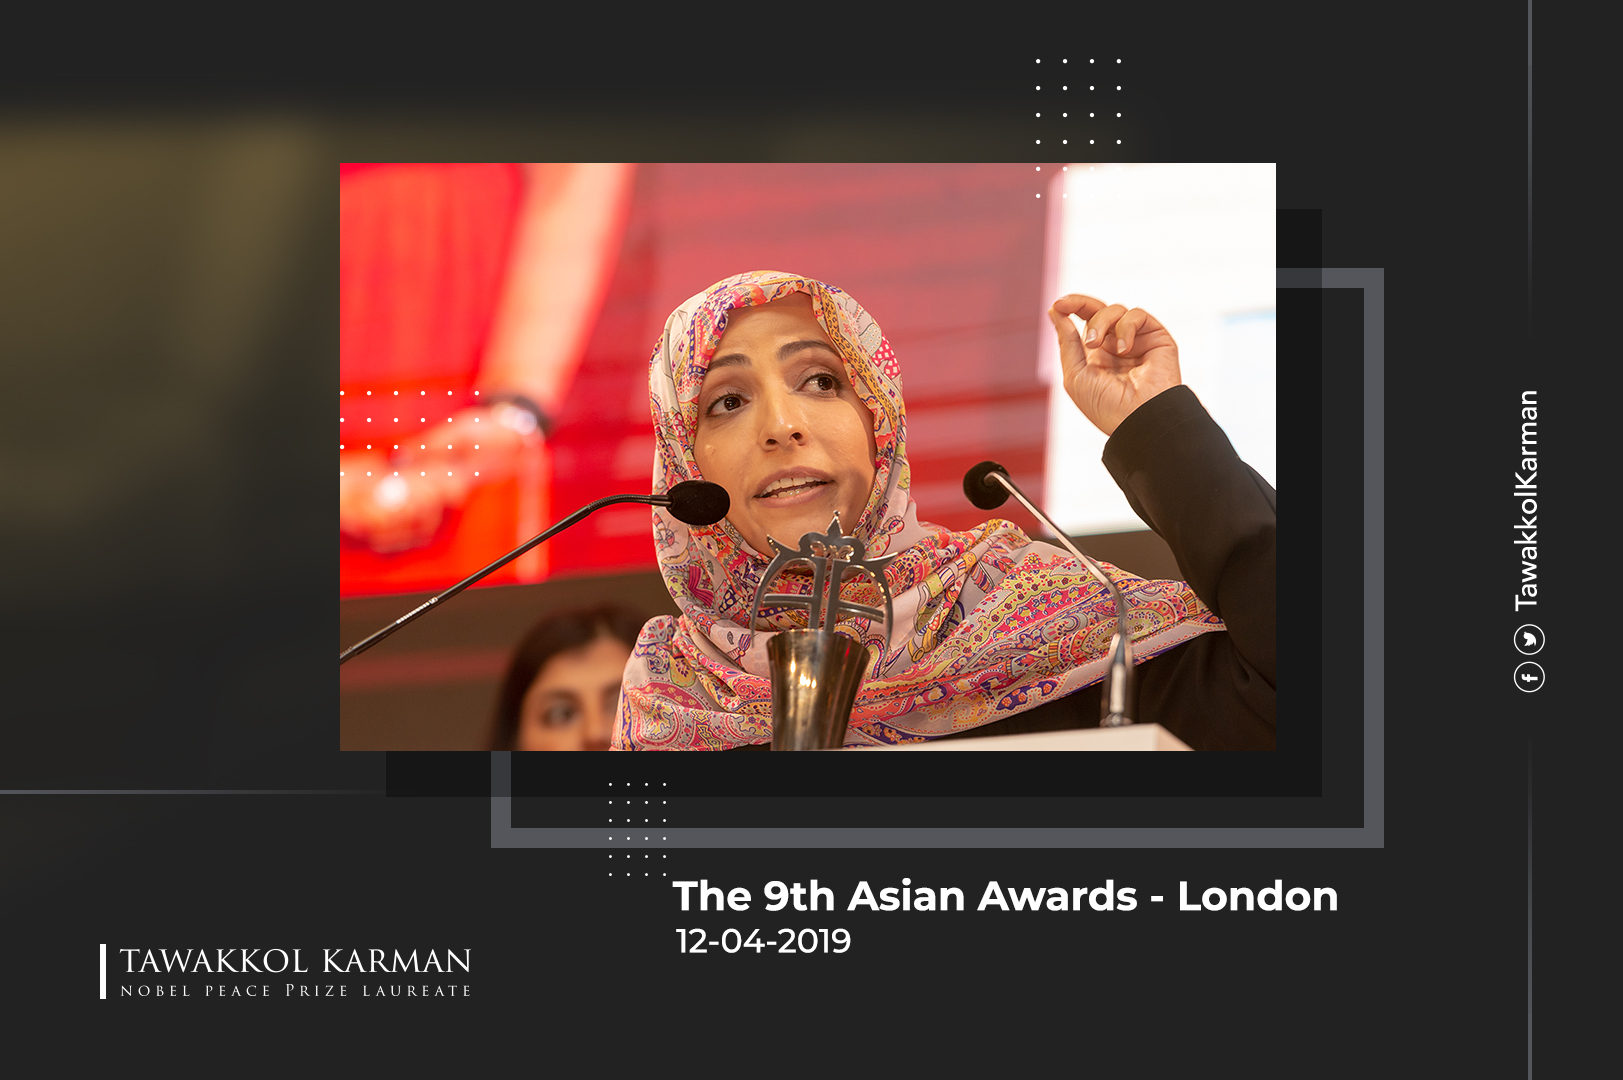 Tawakkol Karman Awarded in the 9th Asian Awards - London